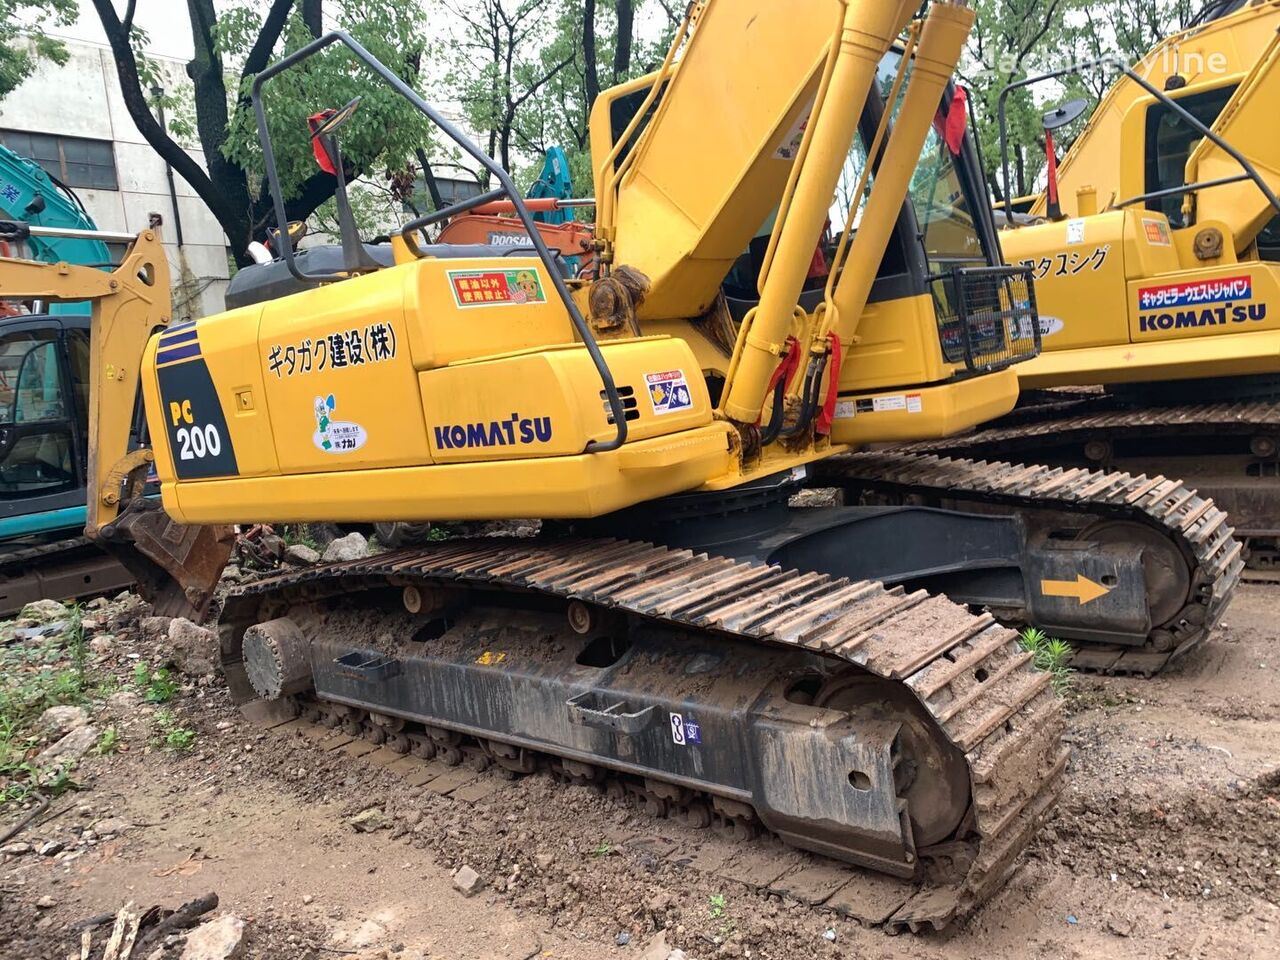 Komatsu PC200-8N1 tracked excavator